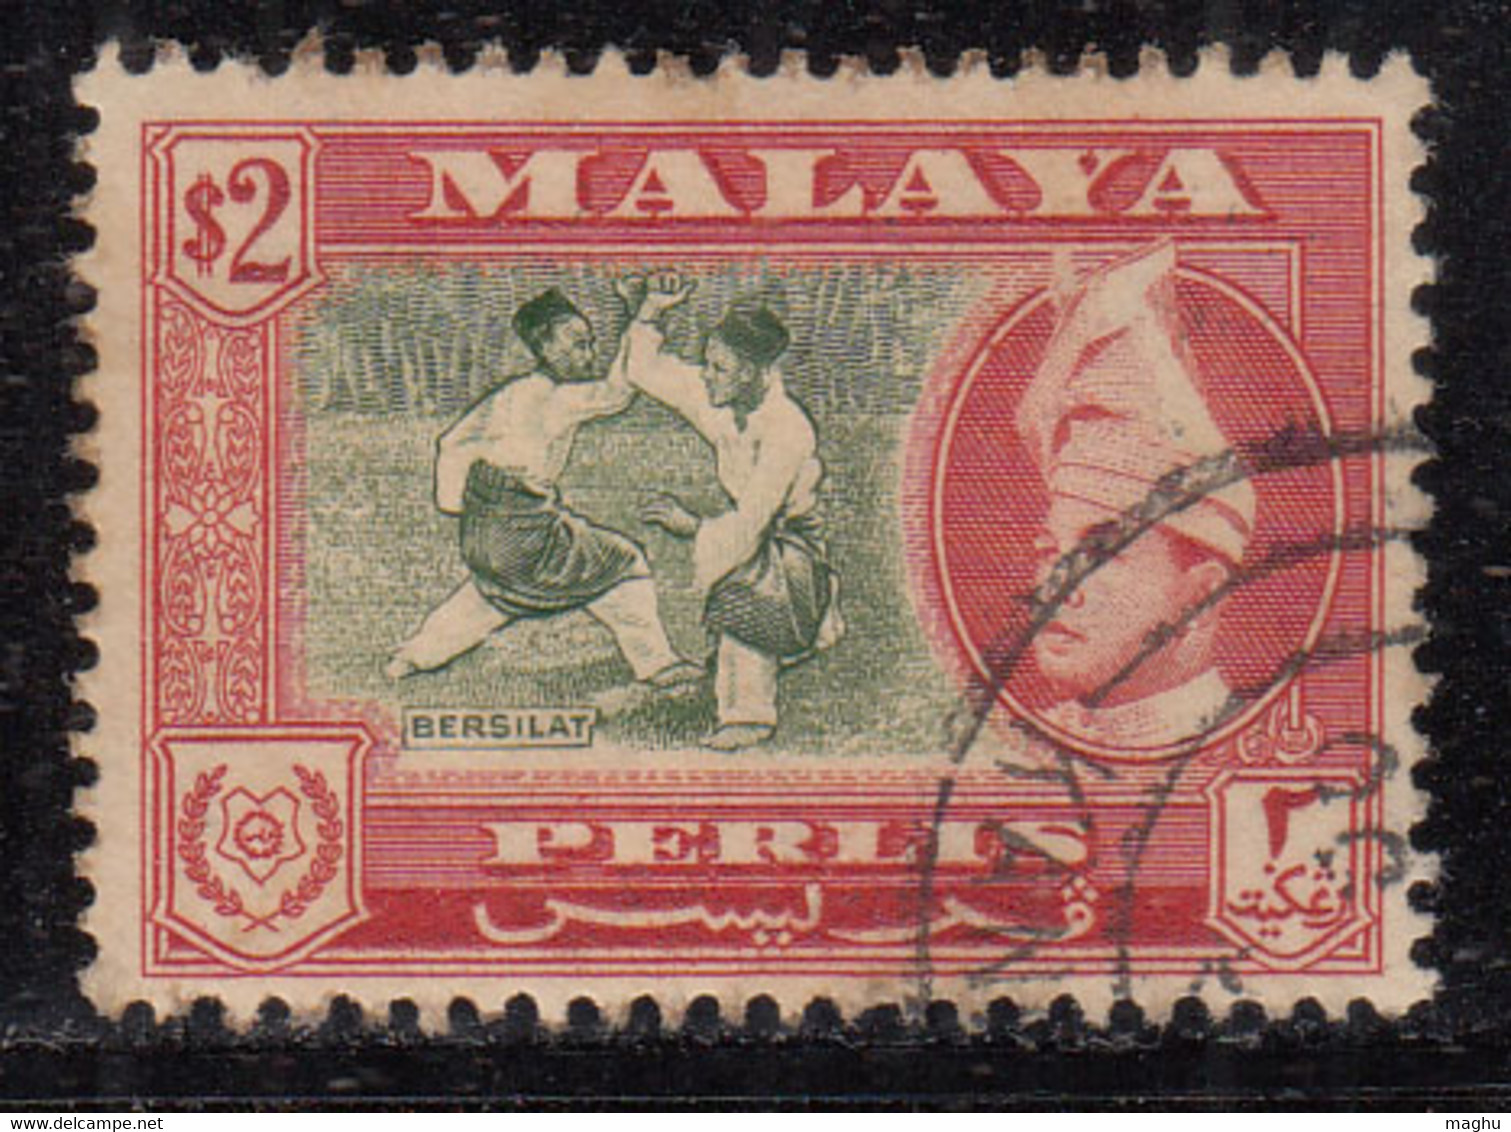 Perlis $2.00 Used 1957, Malaya / Malaysia - Perlis